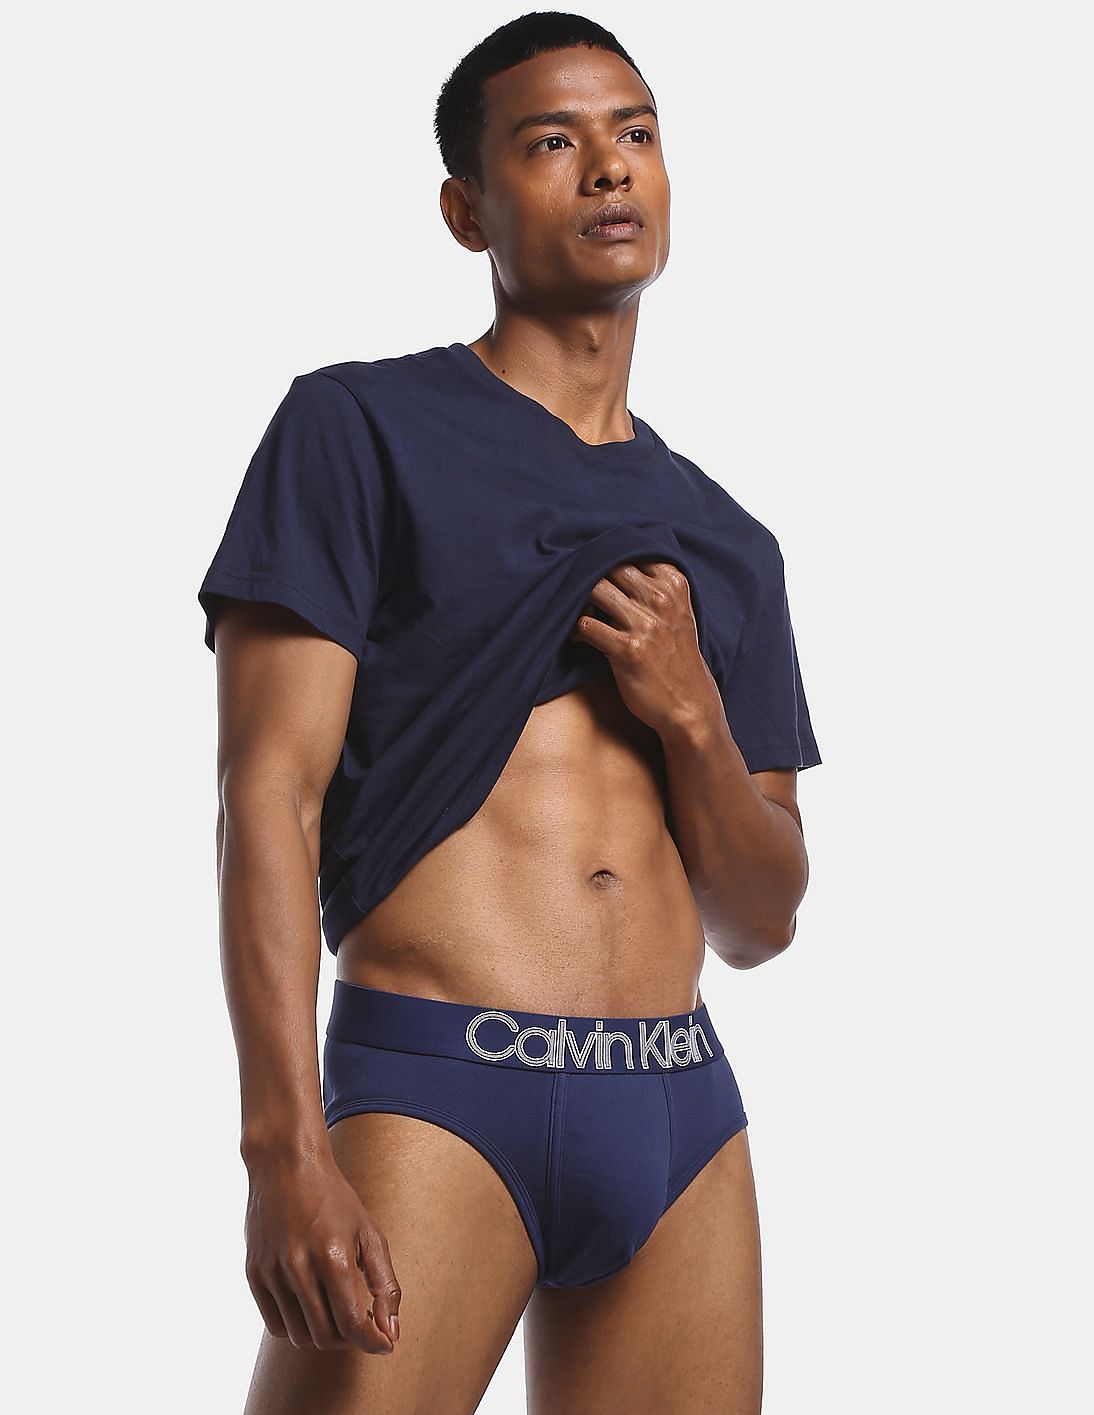 Calvin Klein Underwear Bulge